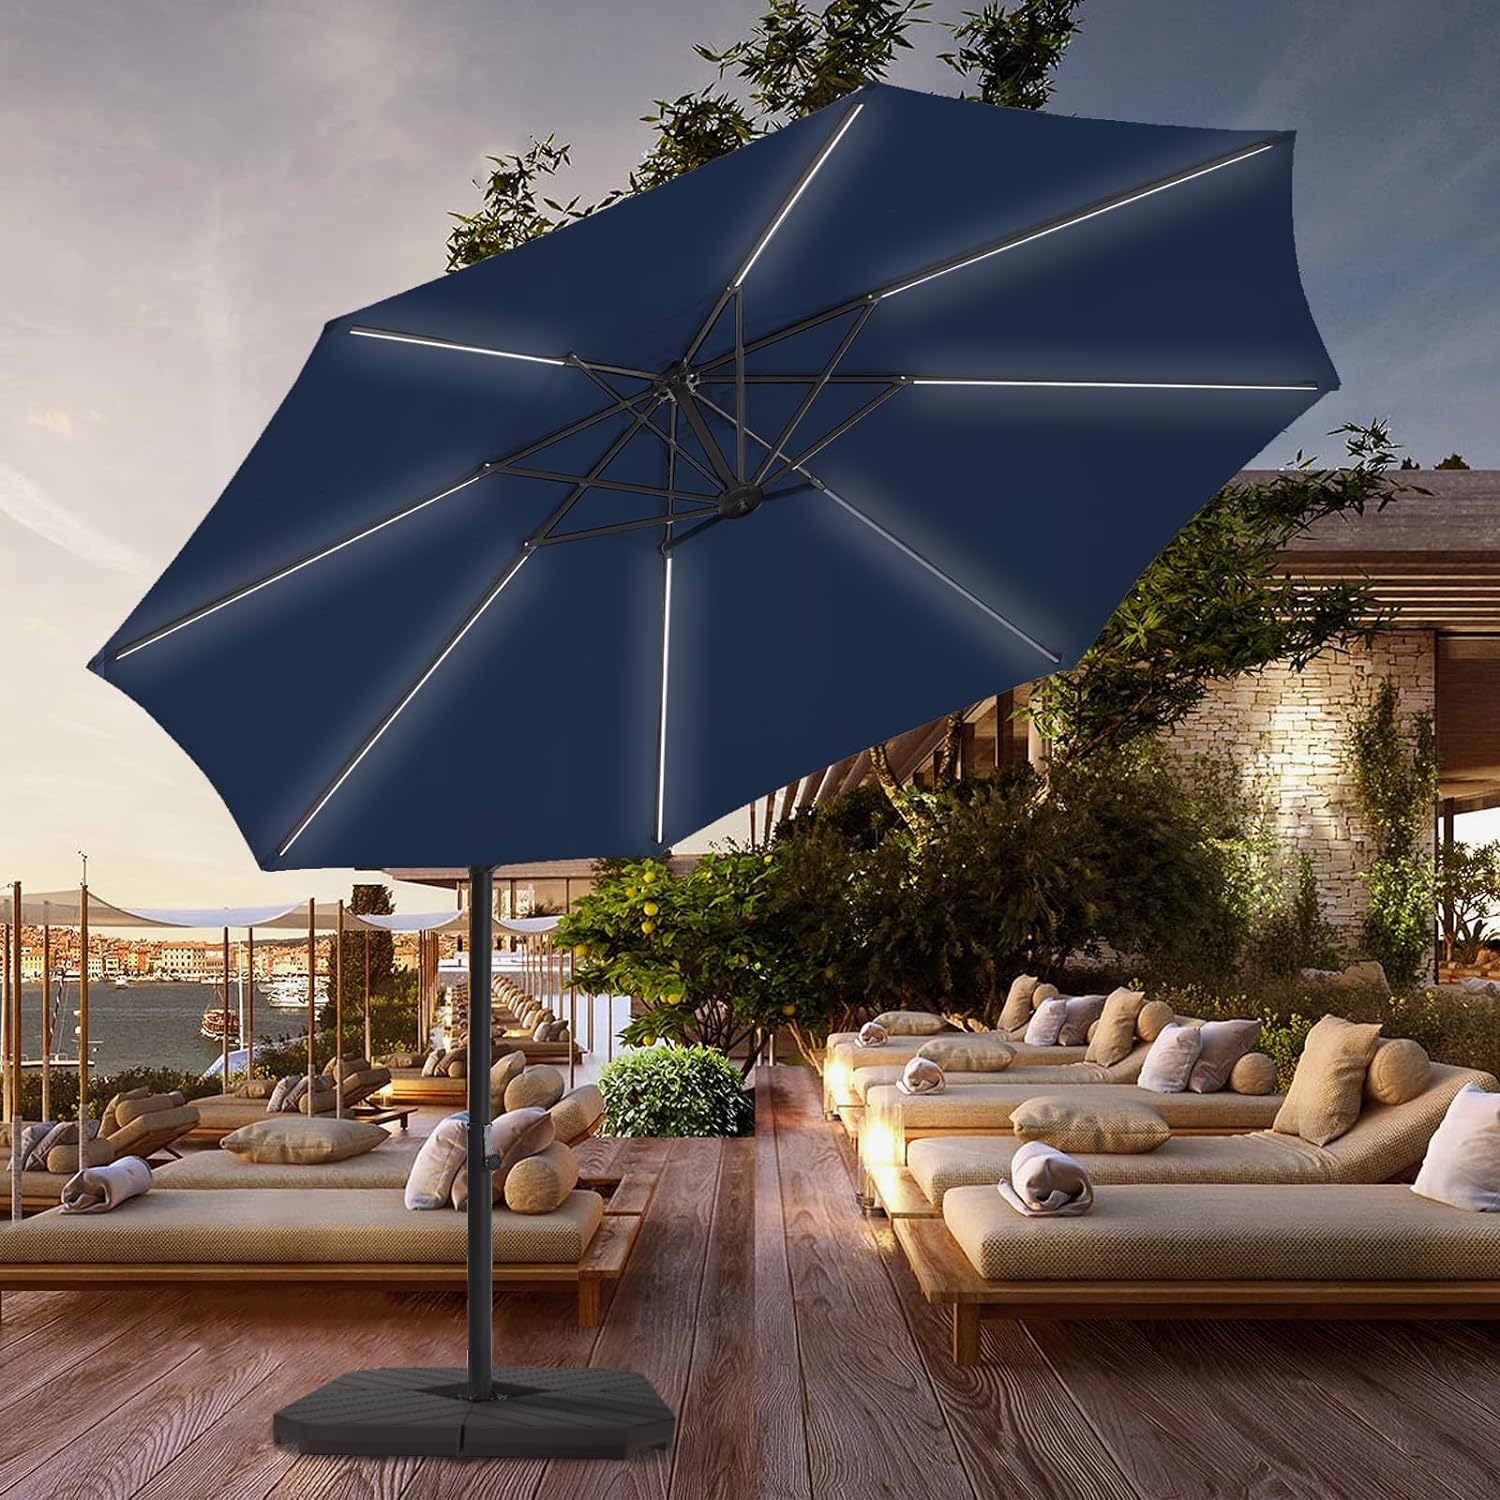 BLUU 10 FT Patio Offset Umbrella Outdoor Cantilever Umbrella Hanging Umbrellas, Fade Resistant Crank & Cross Base (Navy Blue, 10 FT WITH LIGHTS&COVER)